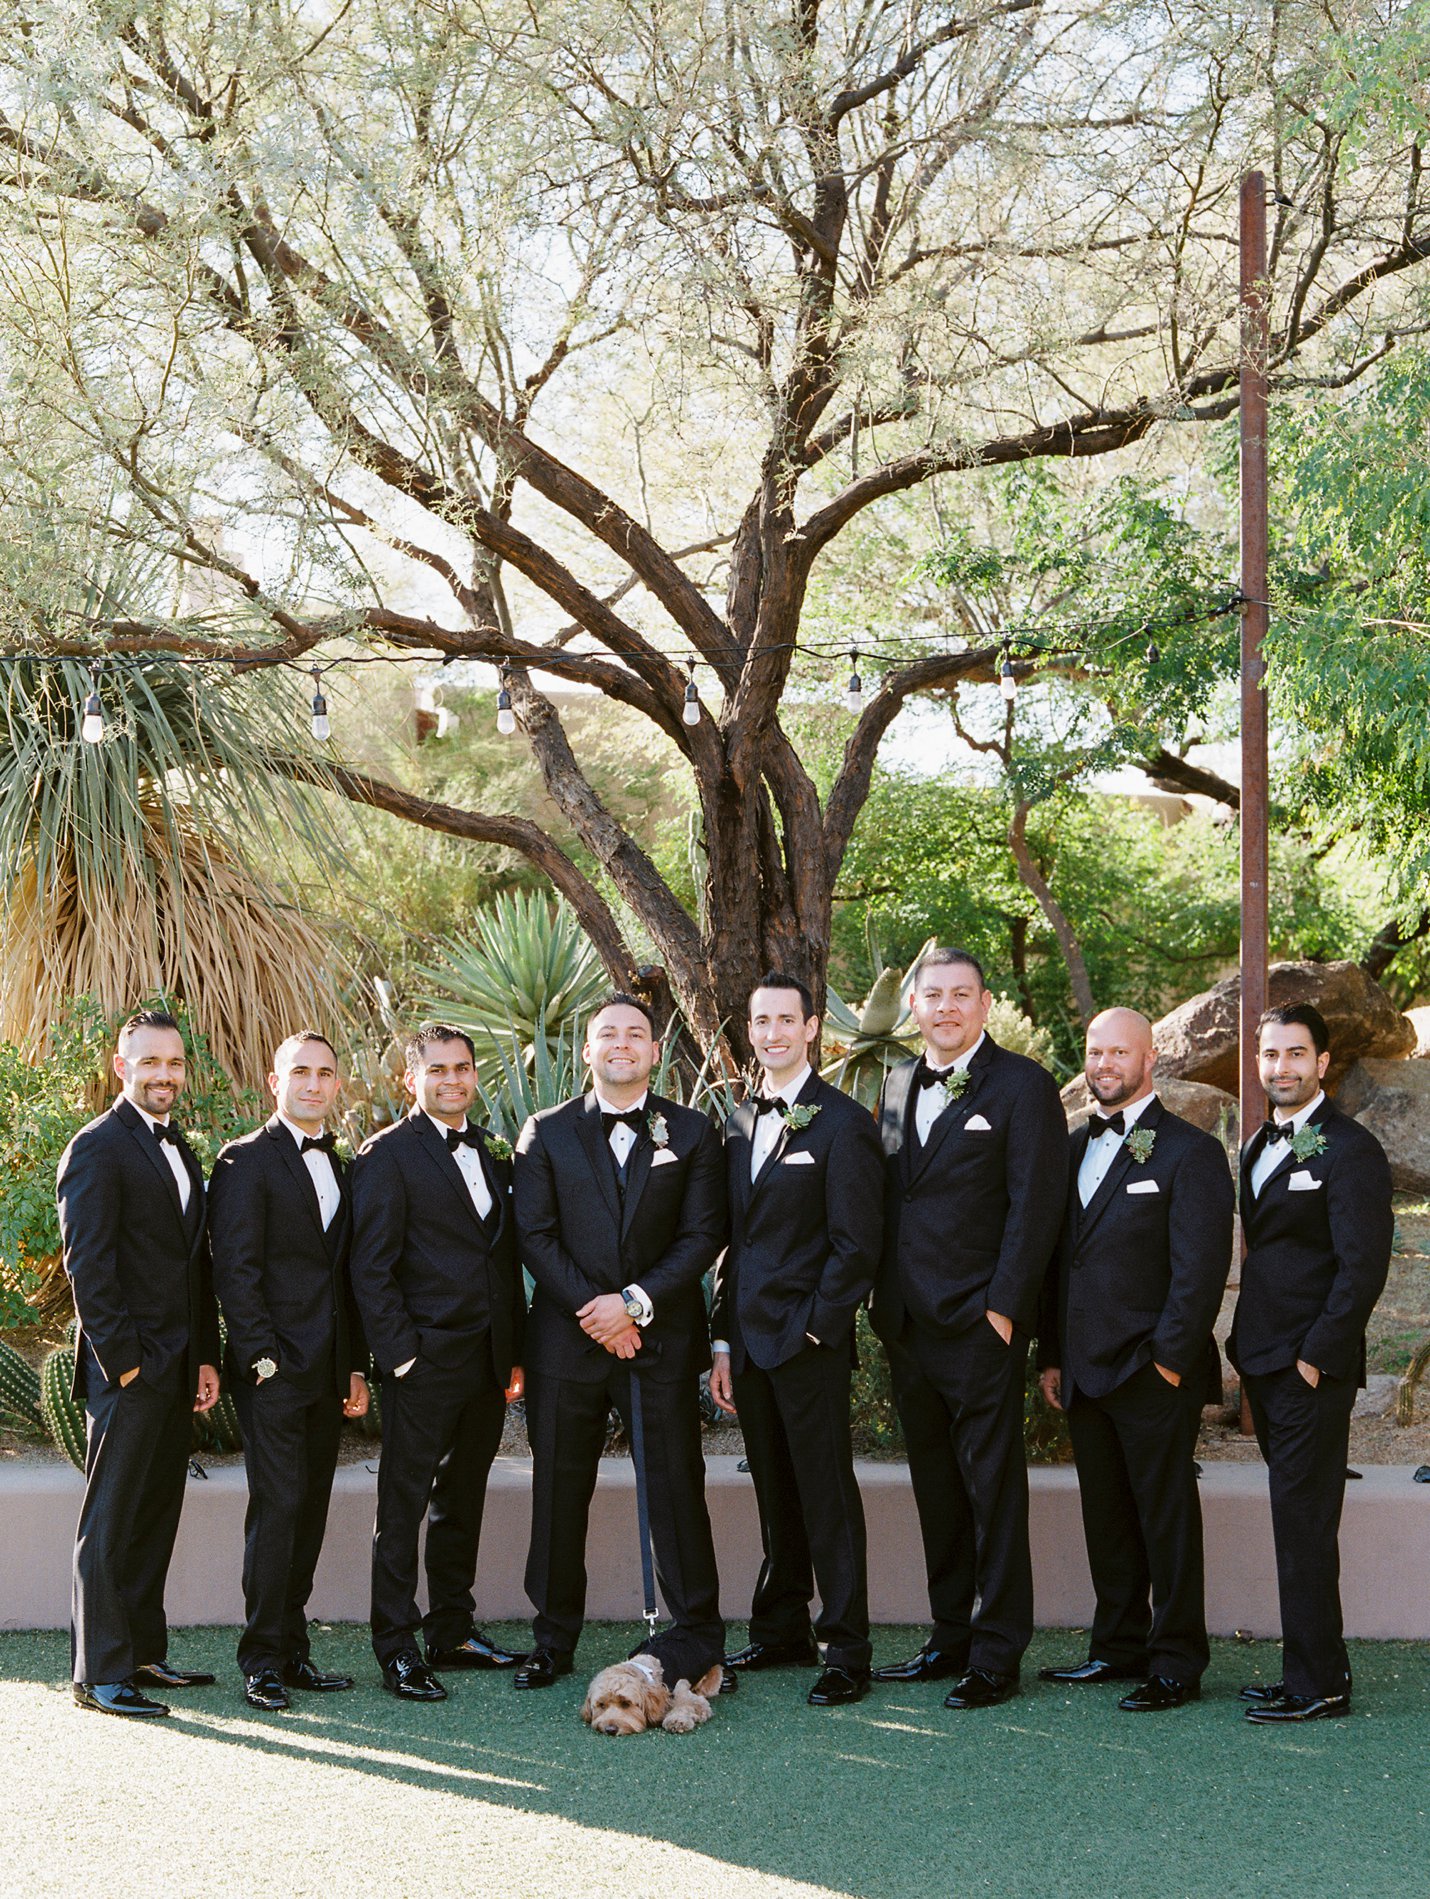 Four Seasons Scottsdale Wedding - Rachel Solomon Photography